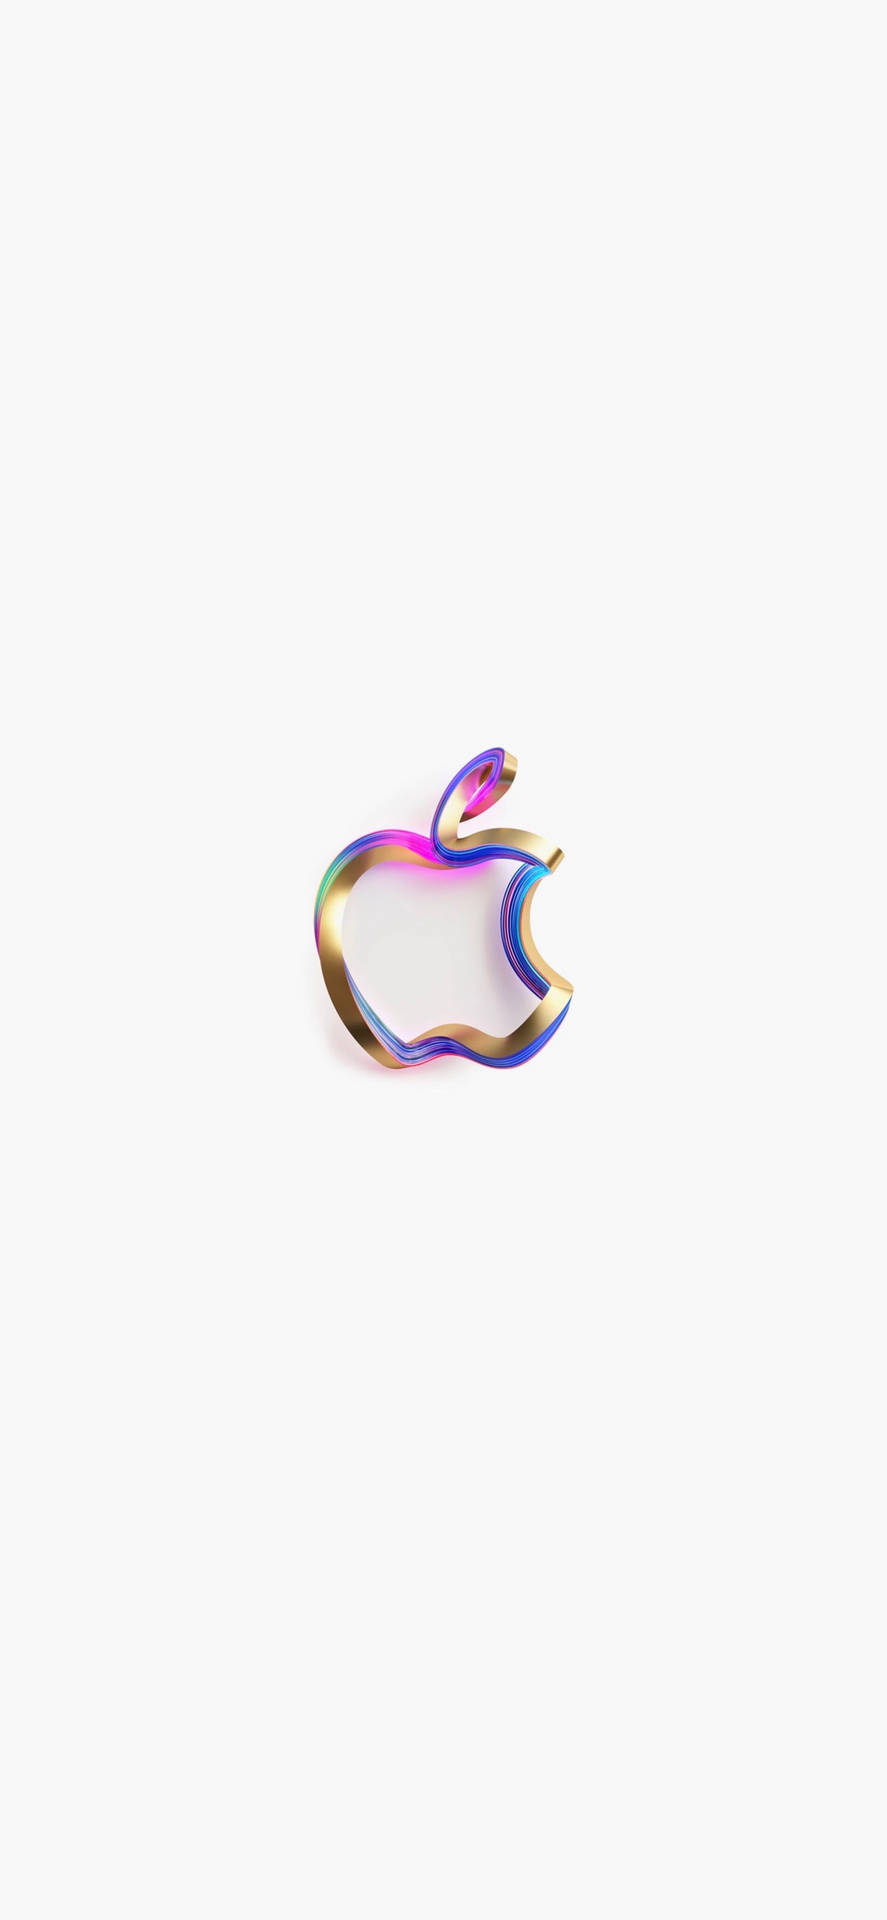 Golden Apple Logo Iphone Background